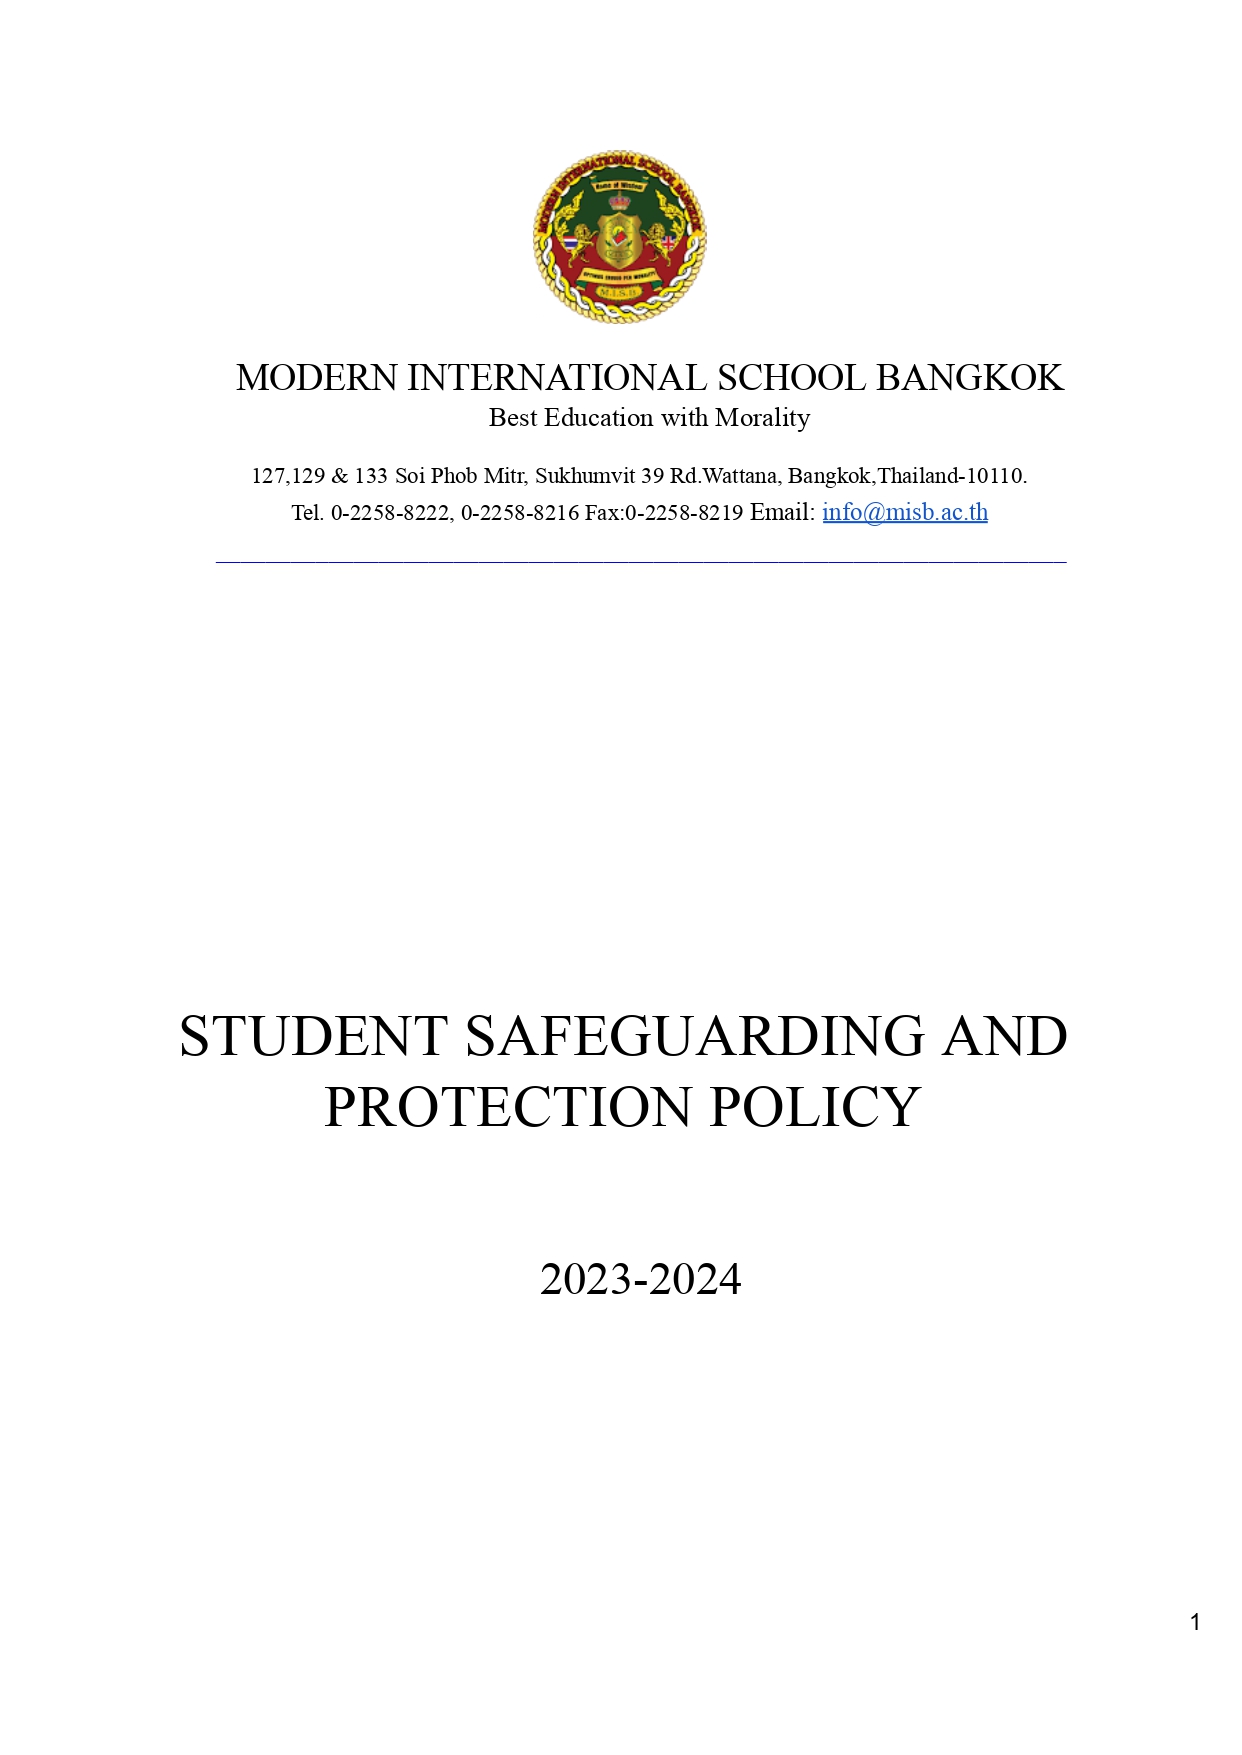 2Modern International School Bangkok Safeguarding Policy August 23 1 page 0001